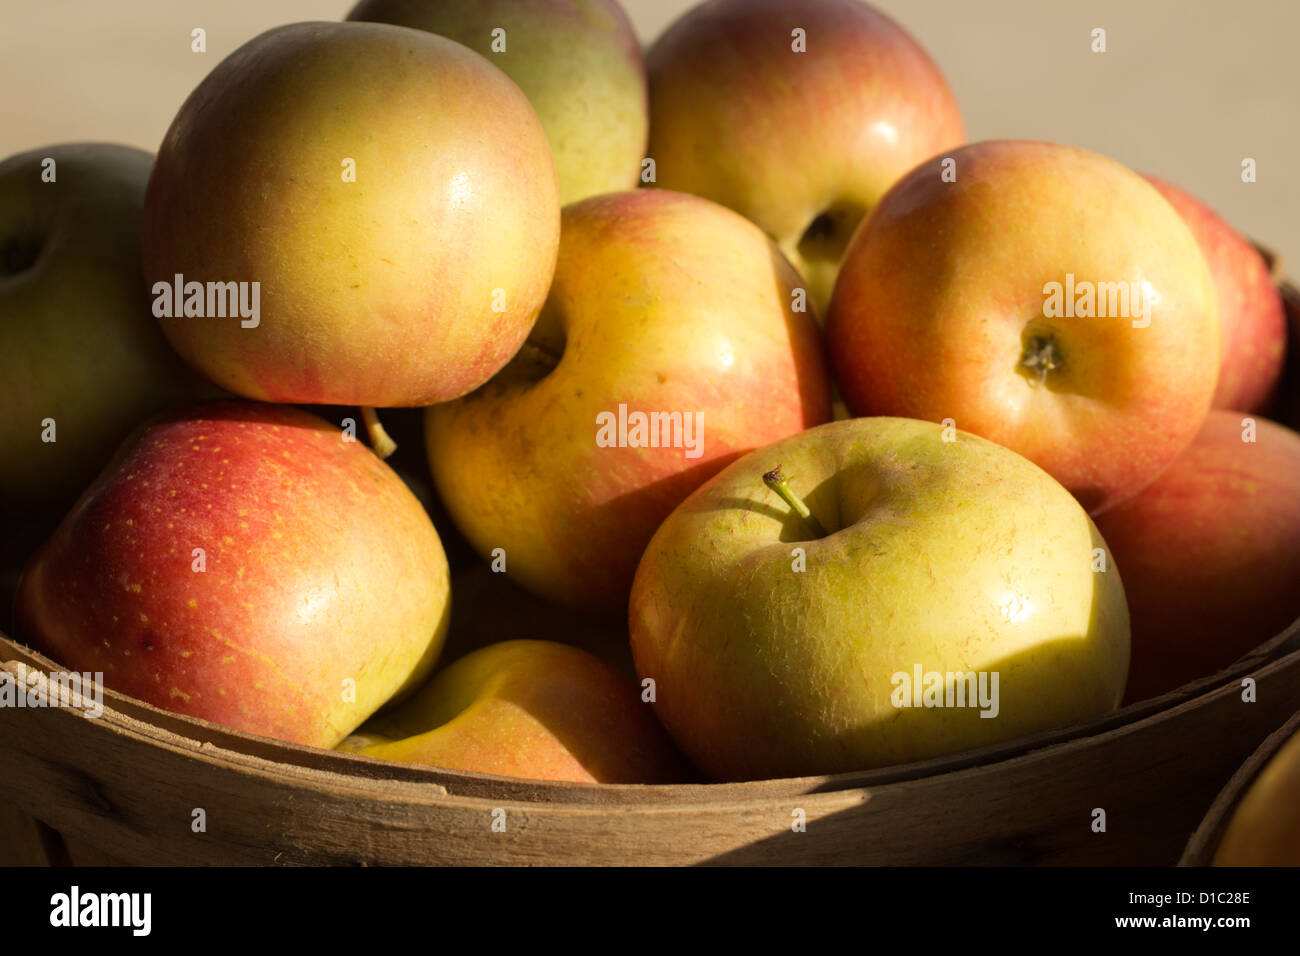 basket of stayman apples Stock Photo